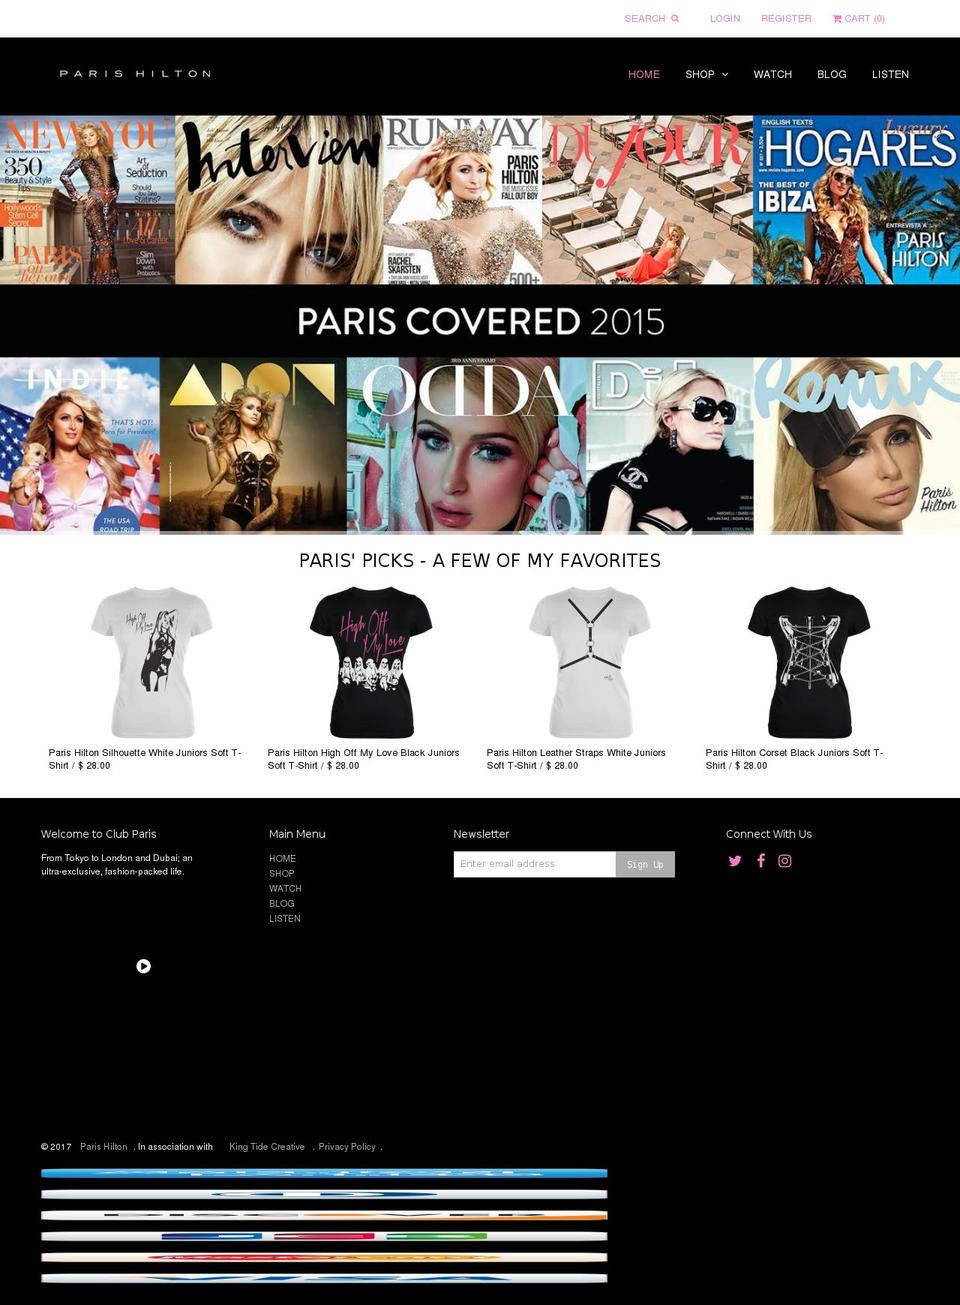 pairshiltonmovies.biz shopify website screenshot